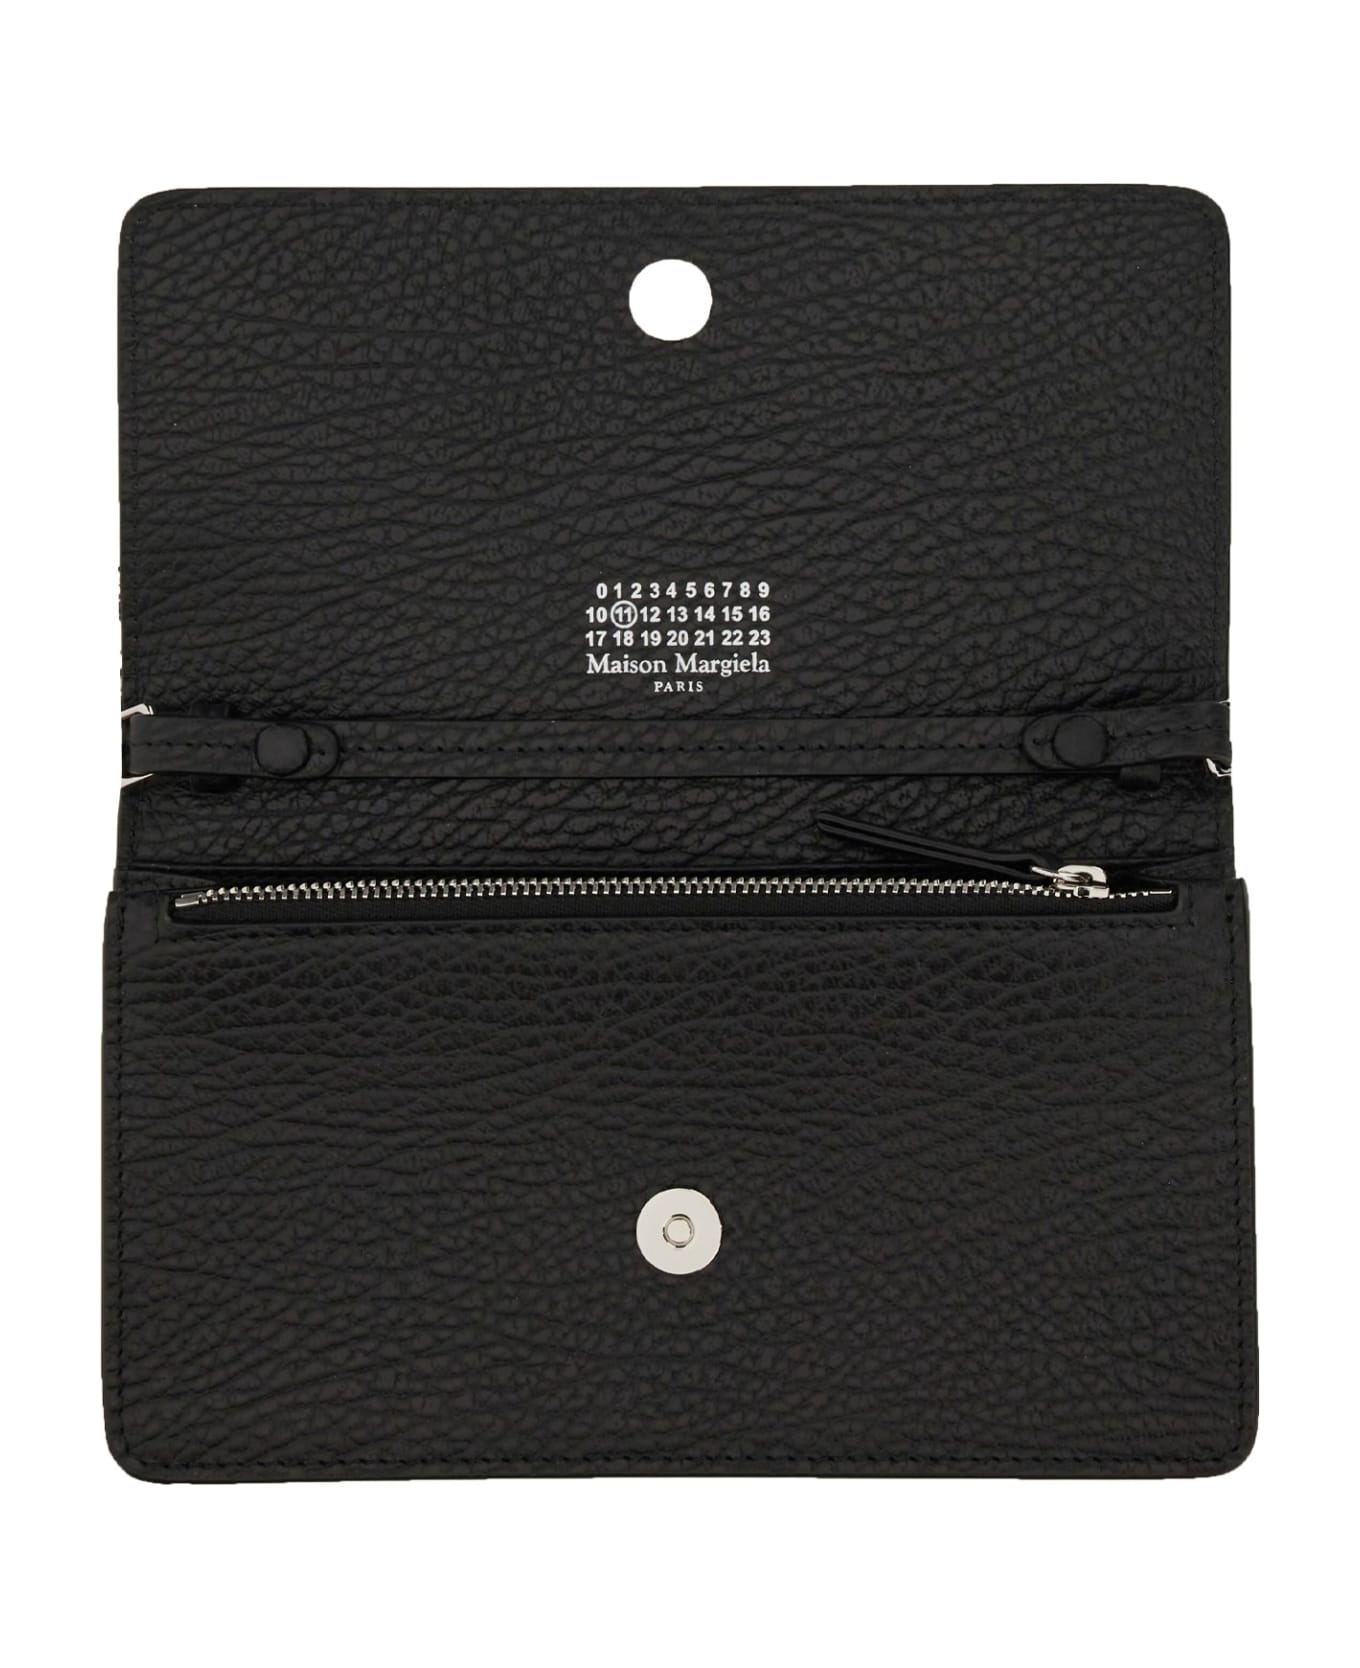 Maison Margiela Large Wallet With Chain - Black 財布